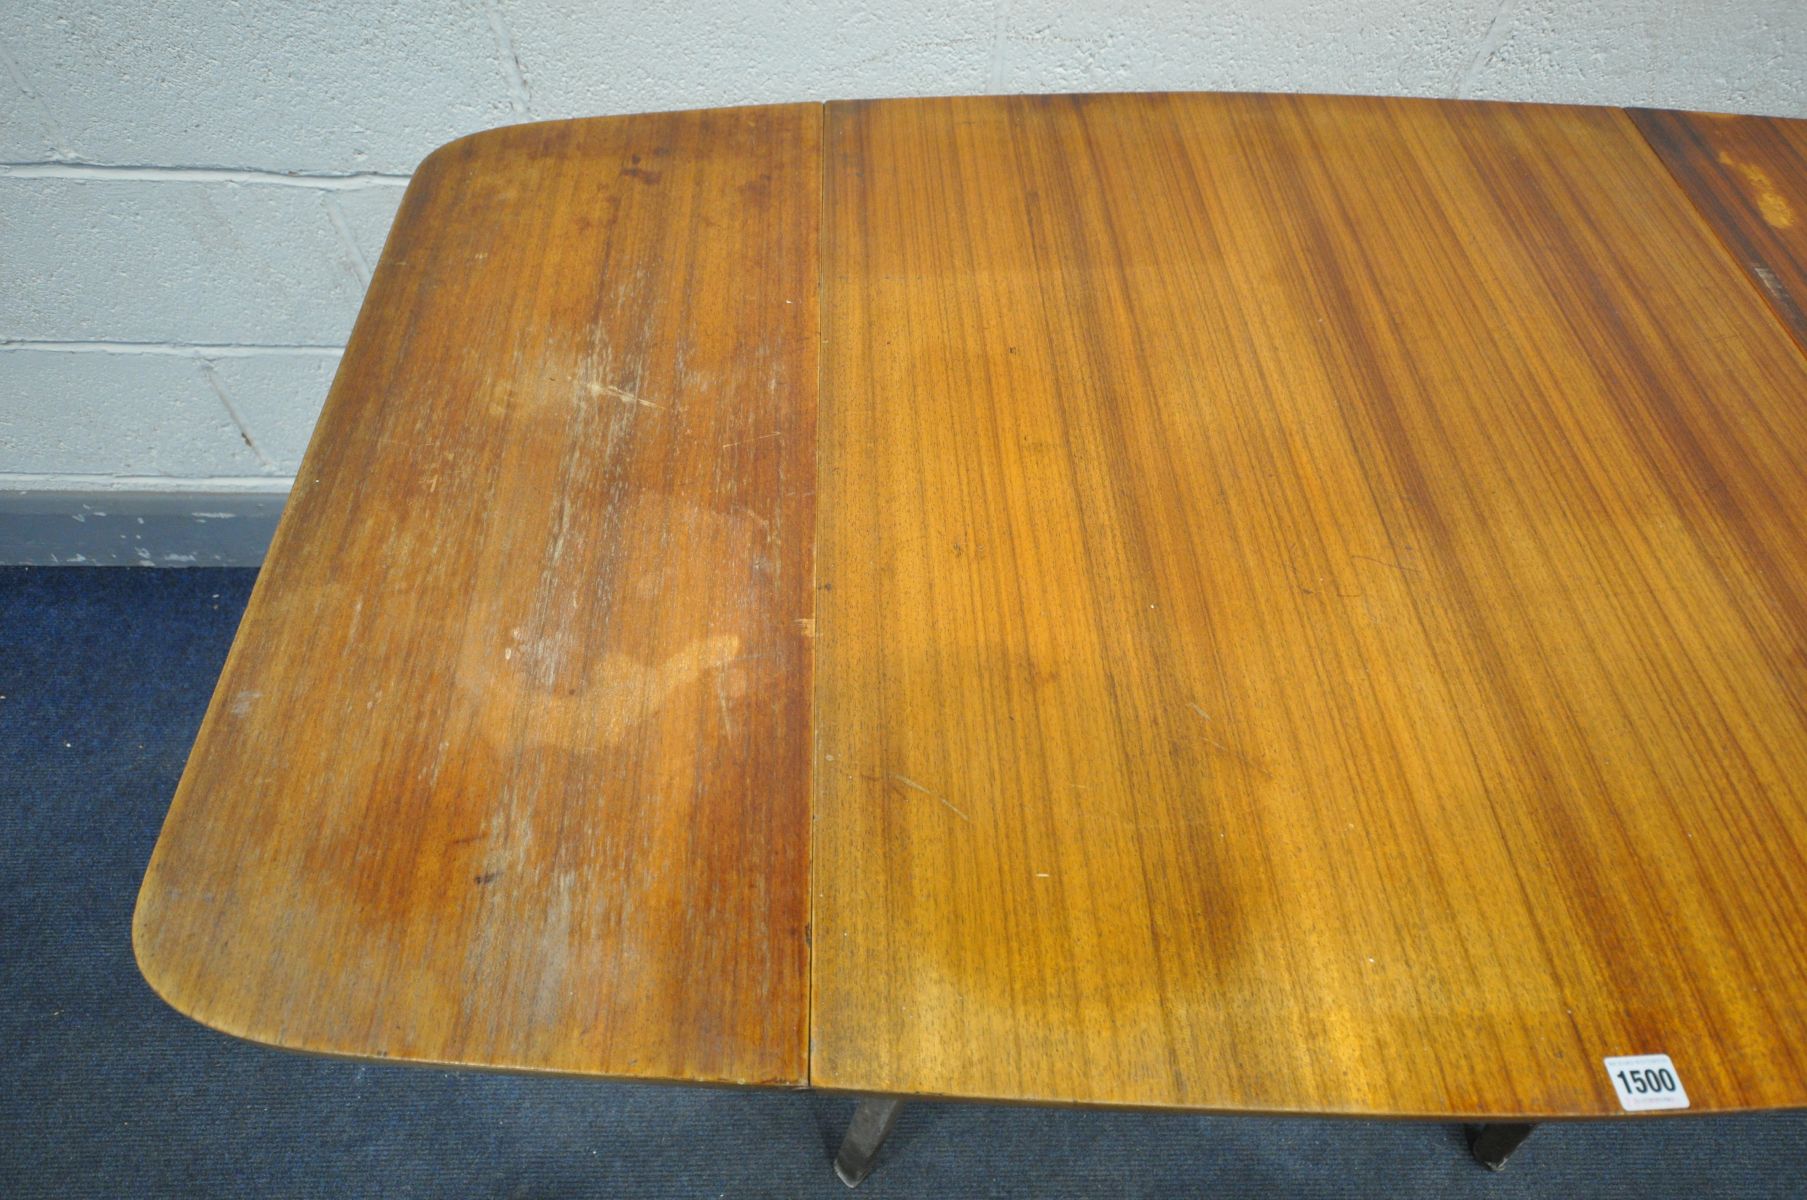 A G-PLAN TEAK DROP LEAF DINING TABLE, open length 138cm x closed length 75cm x depth 85cm x height - Image 2 of 3